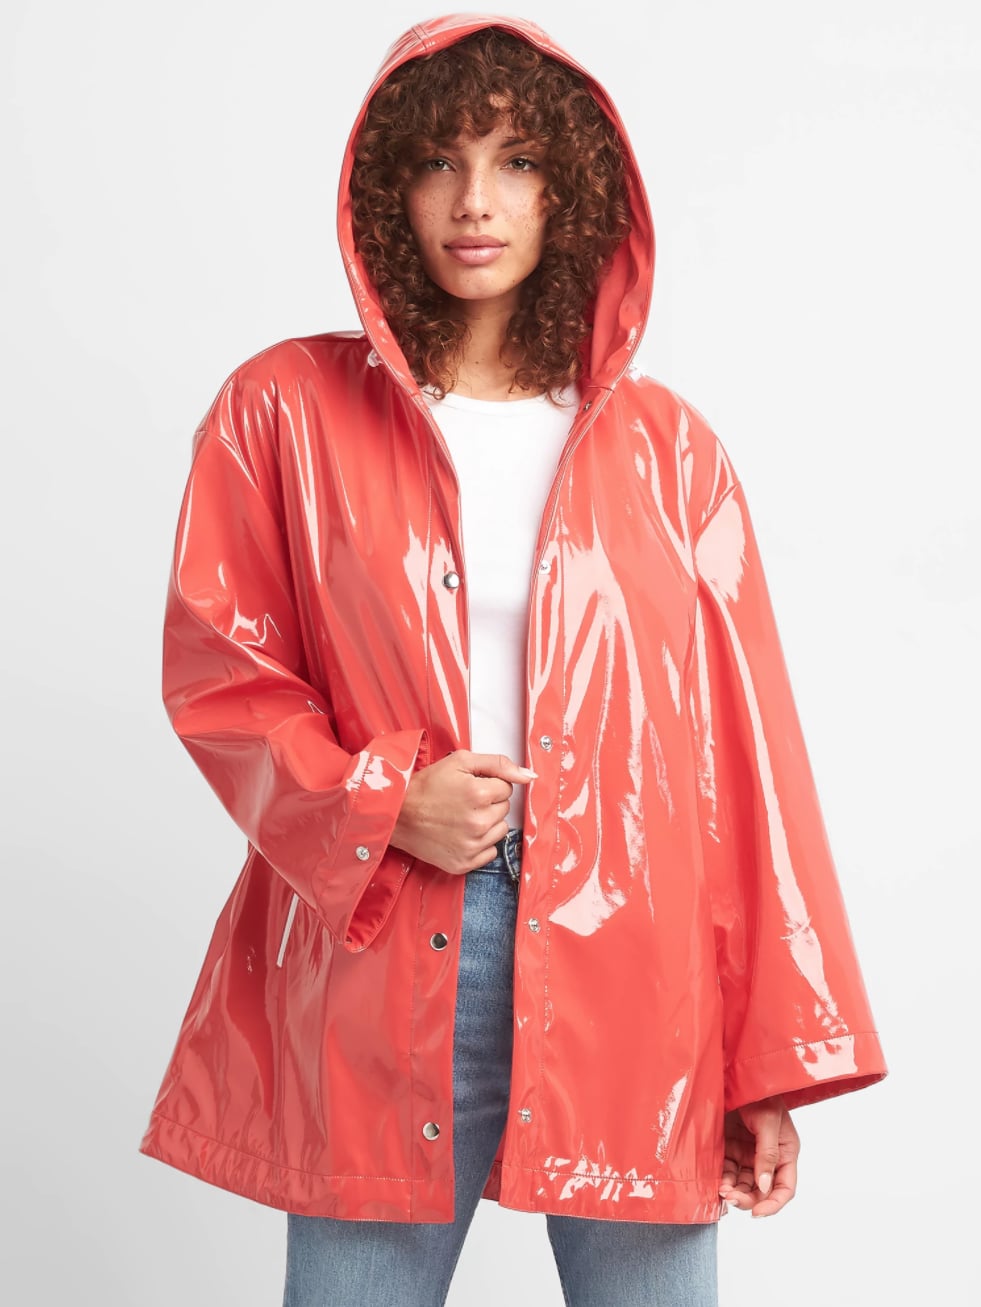 gap women's rain jackets